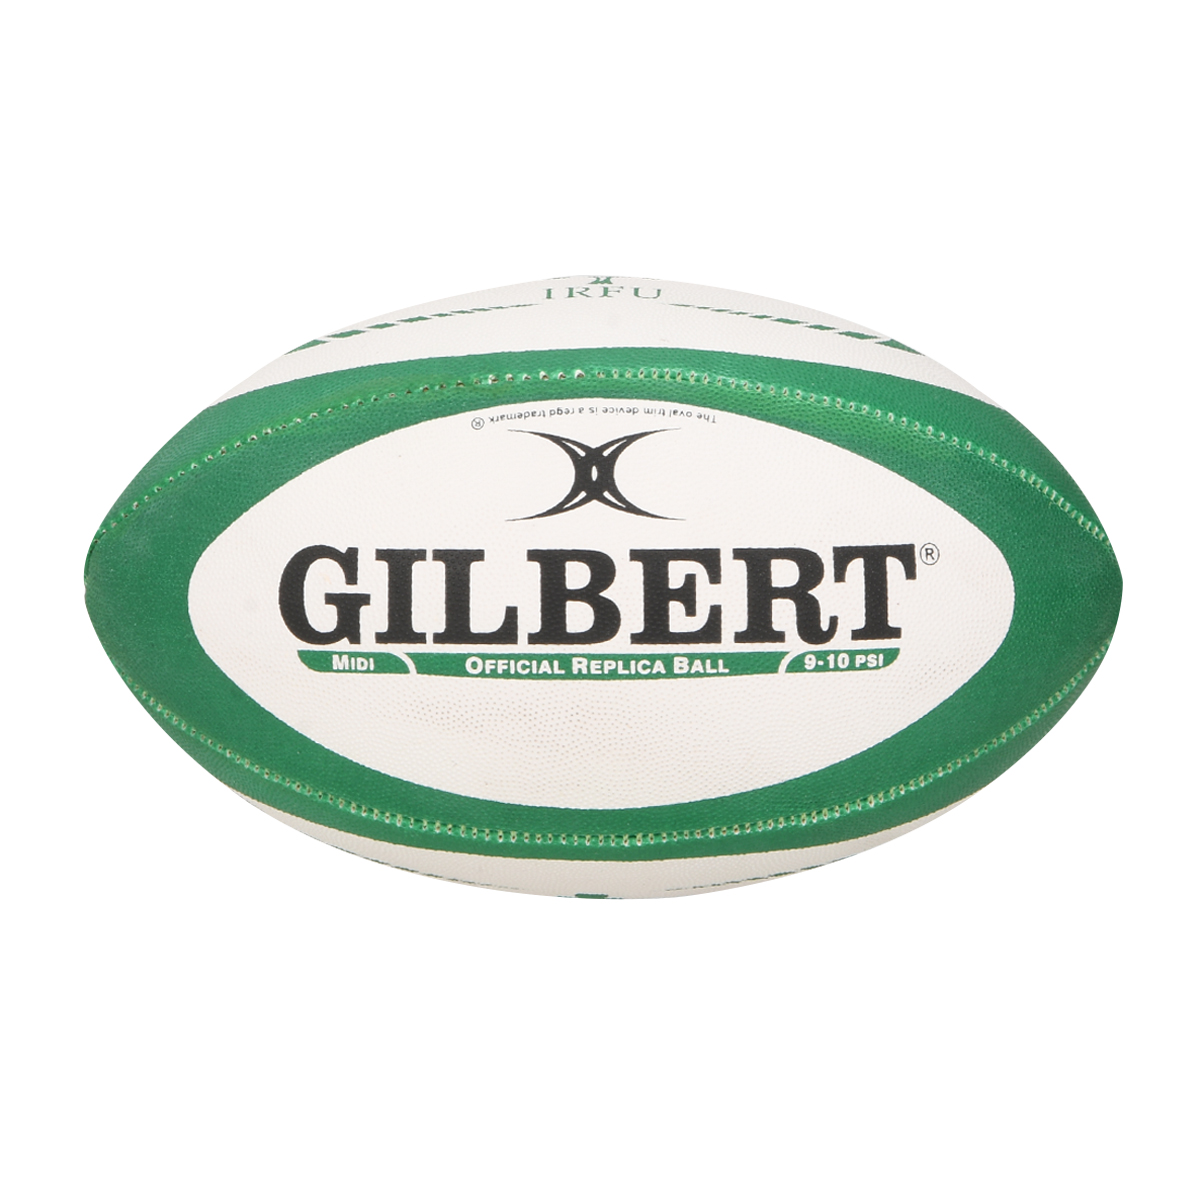 Pelota Rugby Gilbert Ireland Midi,  image number null